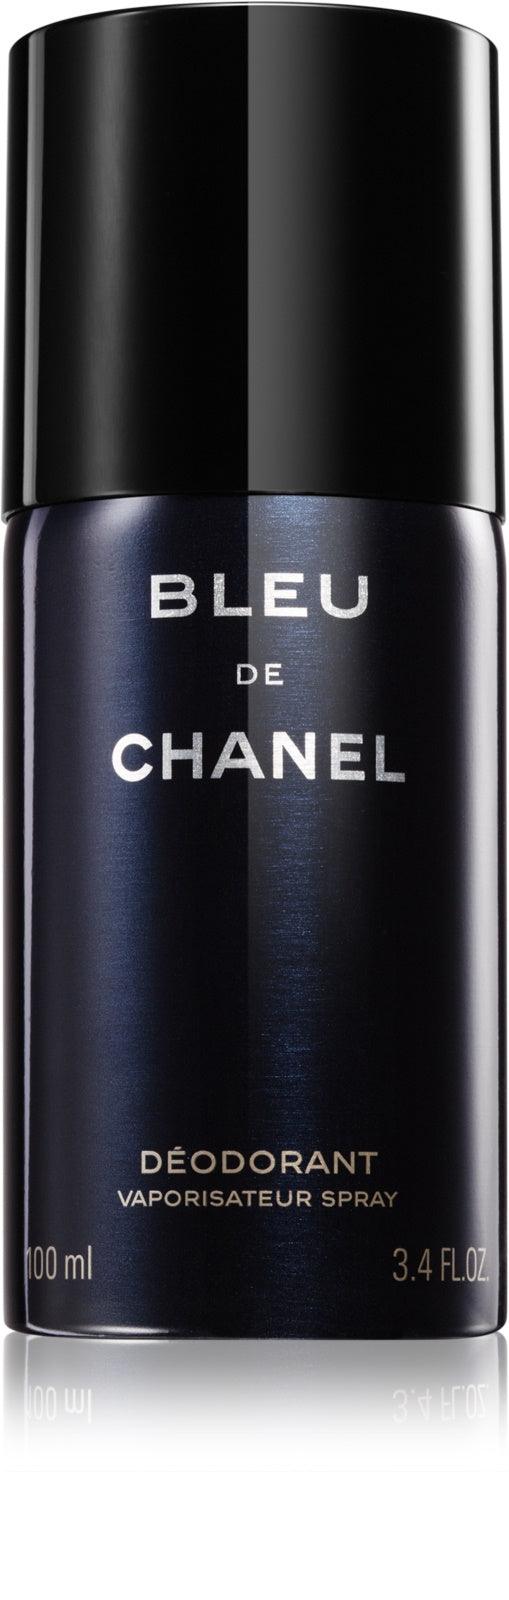 Chanel Bleu de Chanel Deodorant and Bodyspray for men